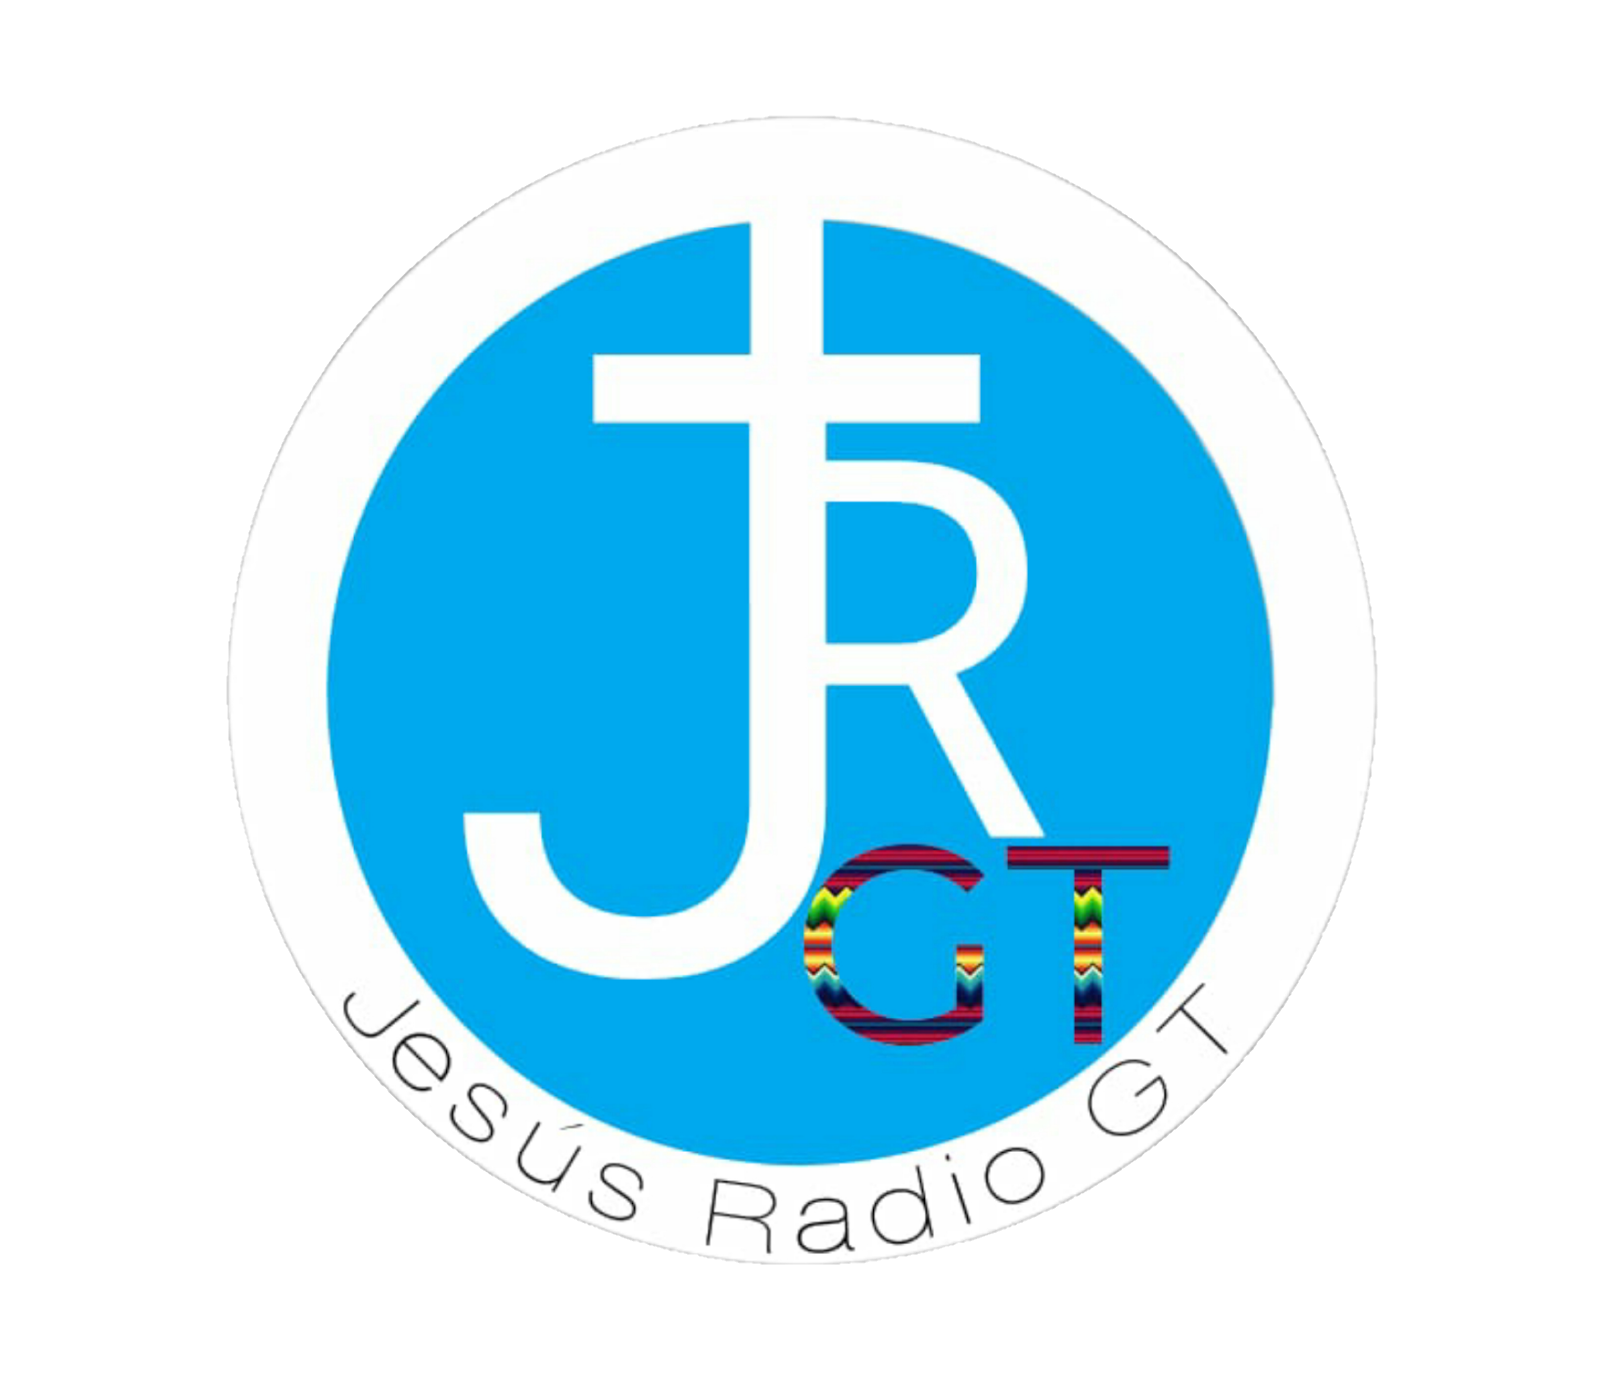 Jesús Radio GT